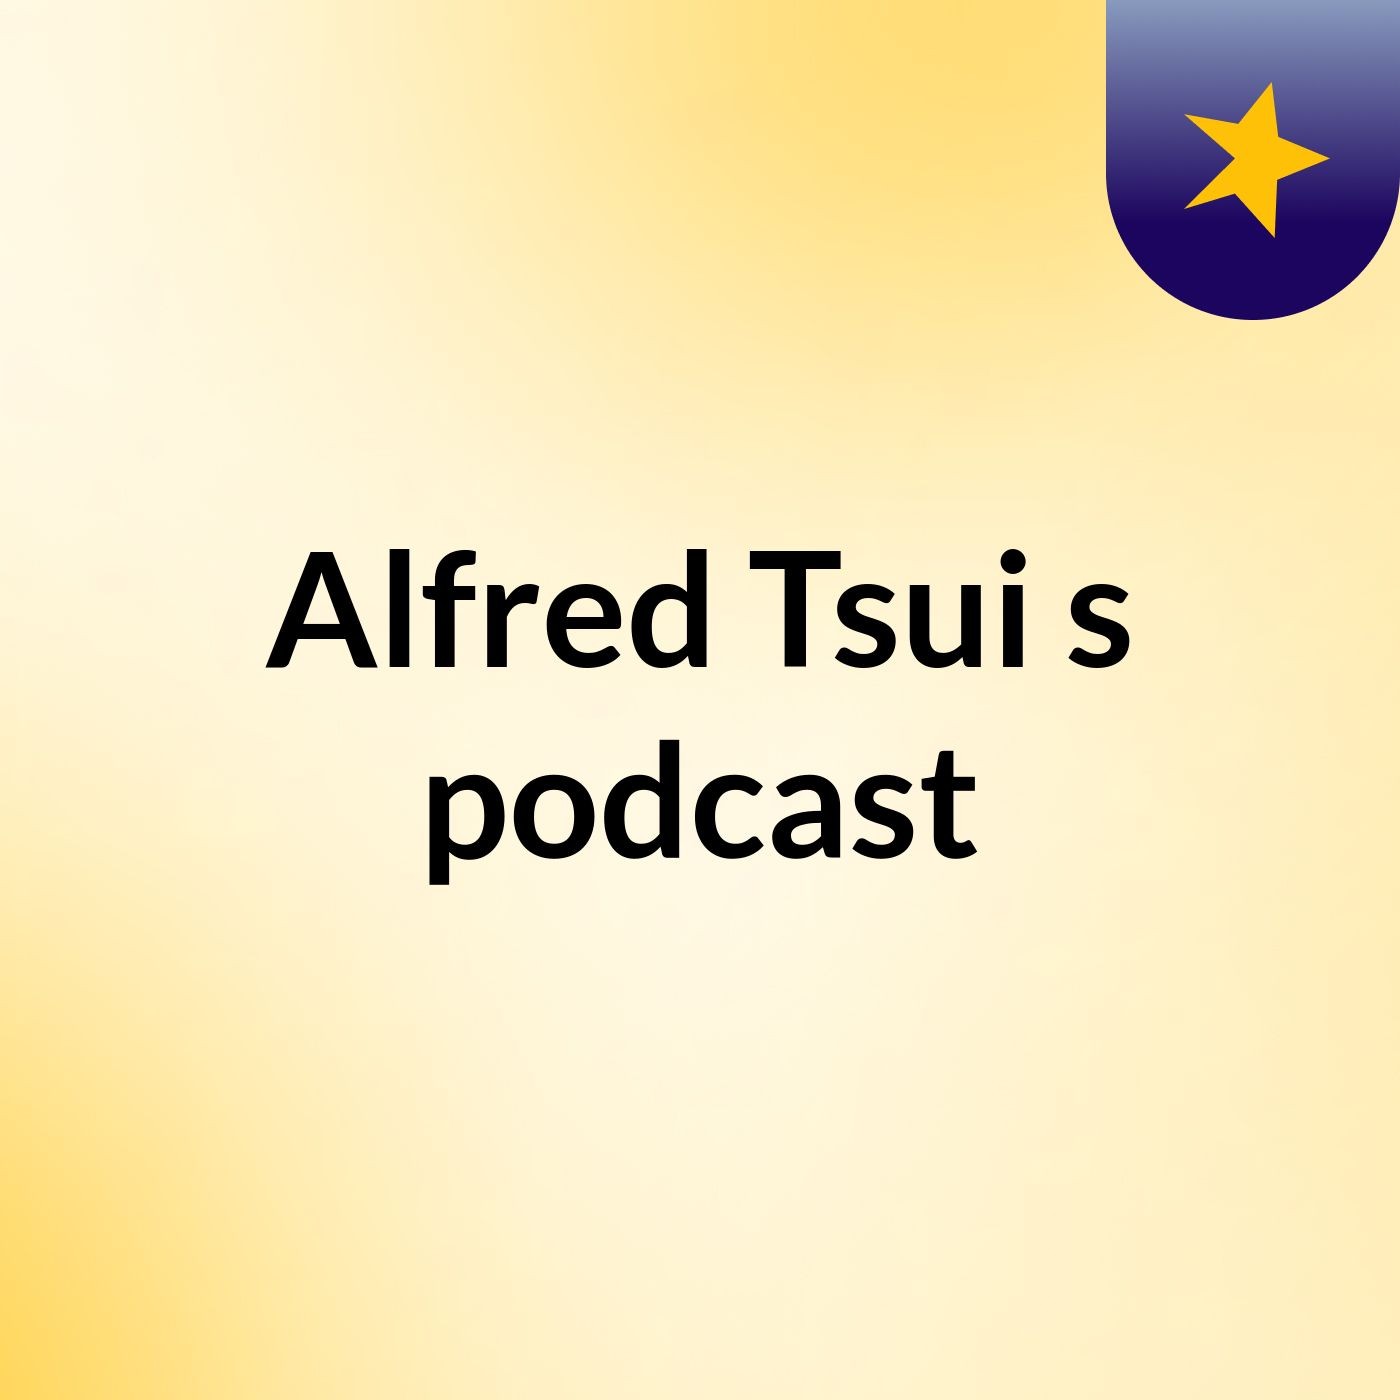 Alfred Tsui's podcast